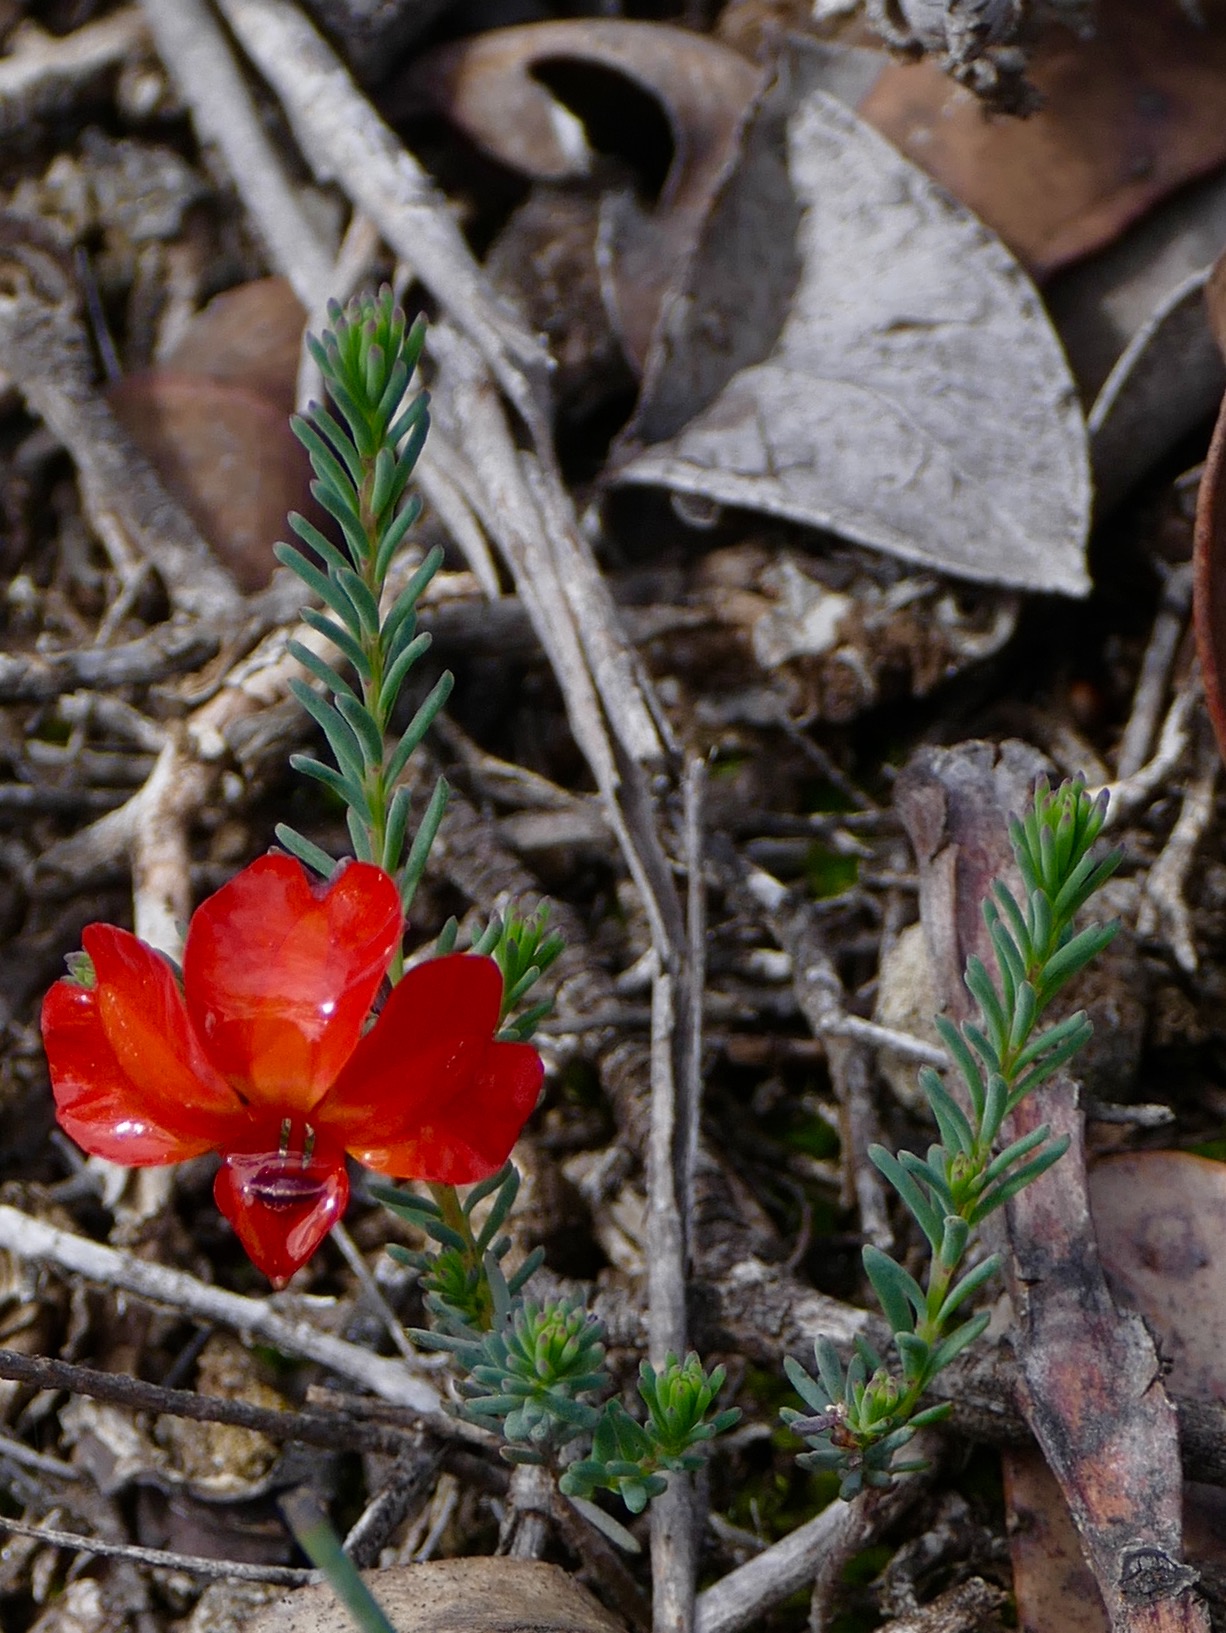 Same red Leschenaultia, closer view.